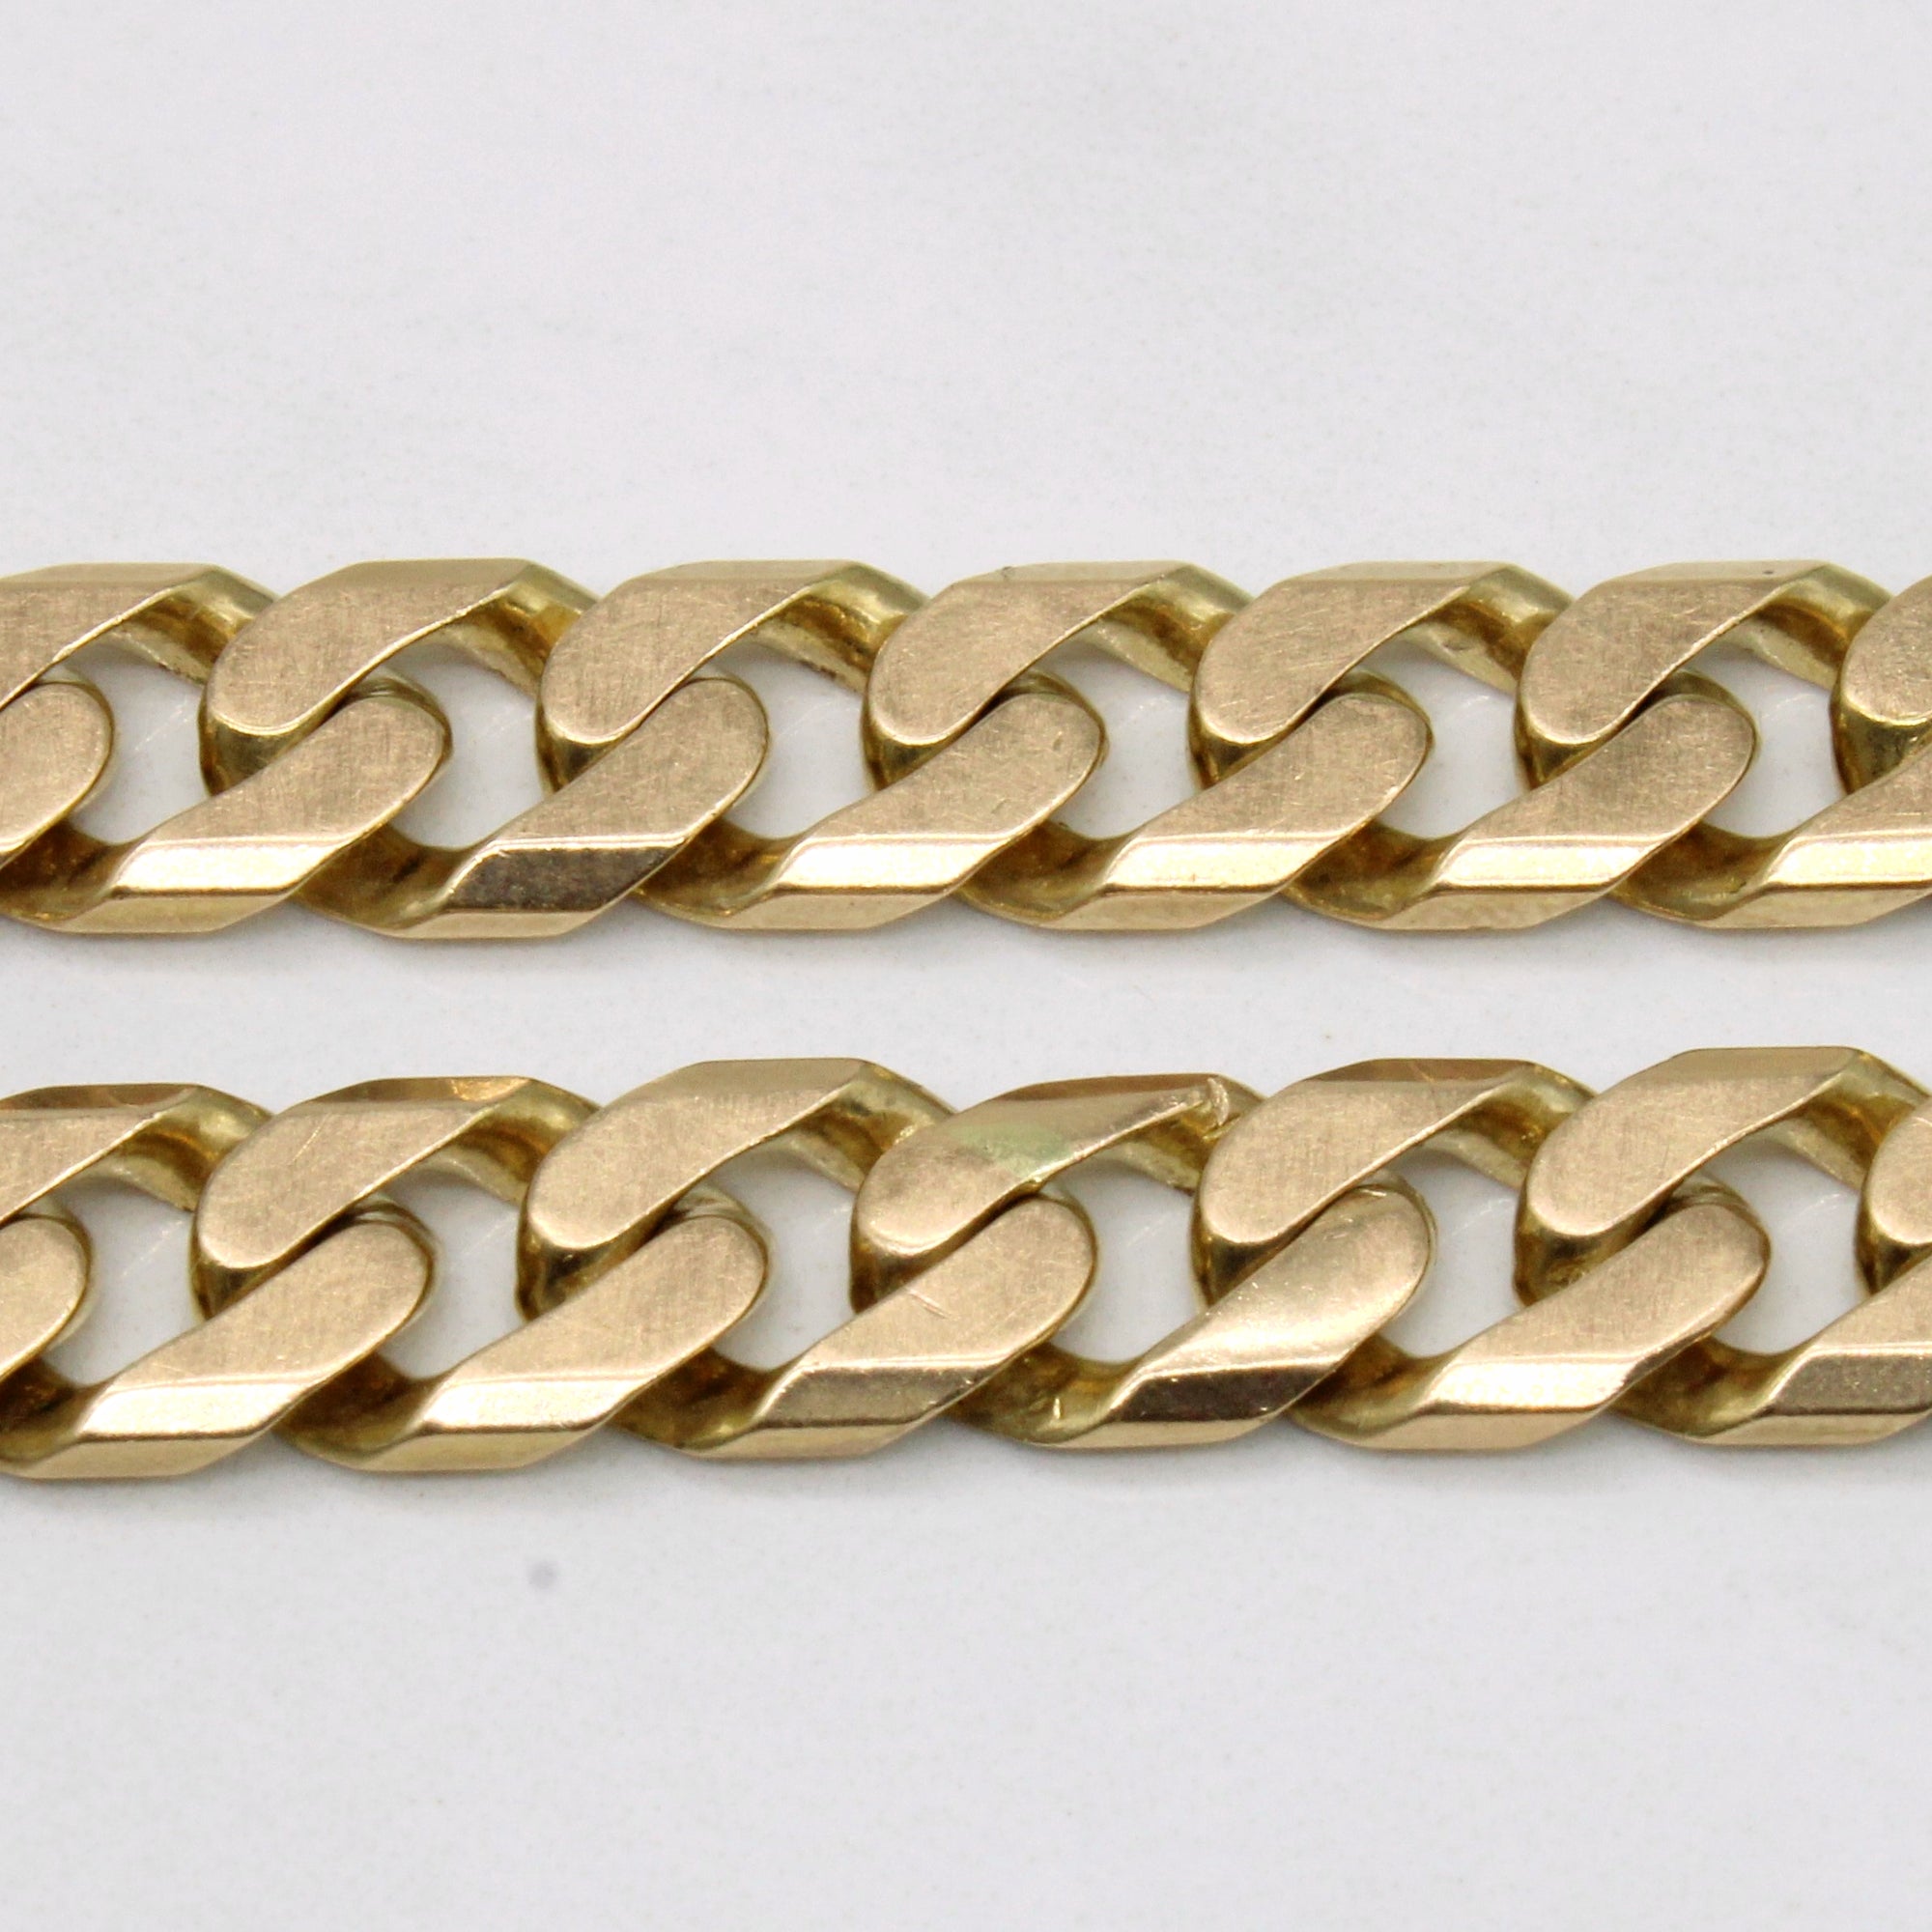 10k Yellow Gold Curb Link Bracelet | 9.25